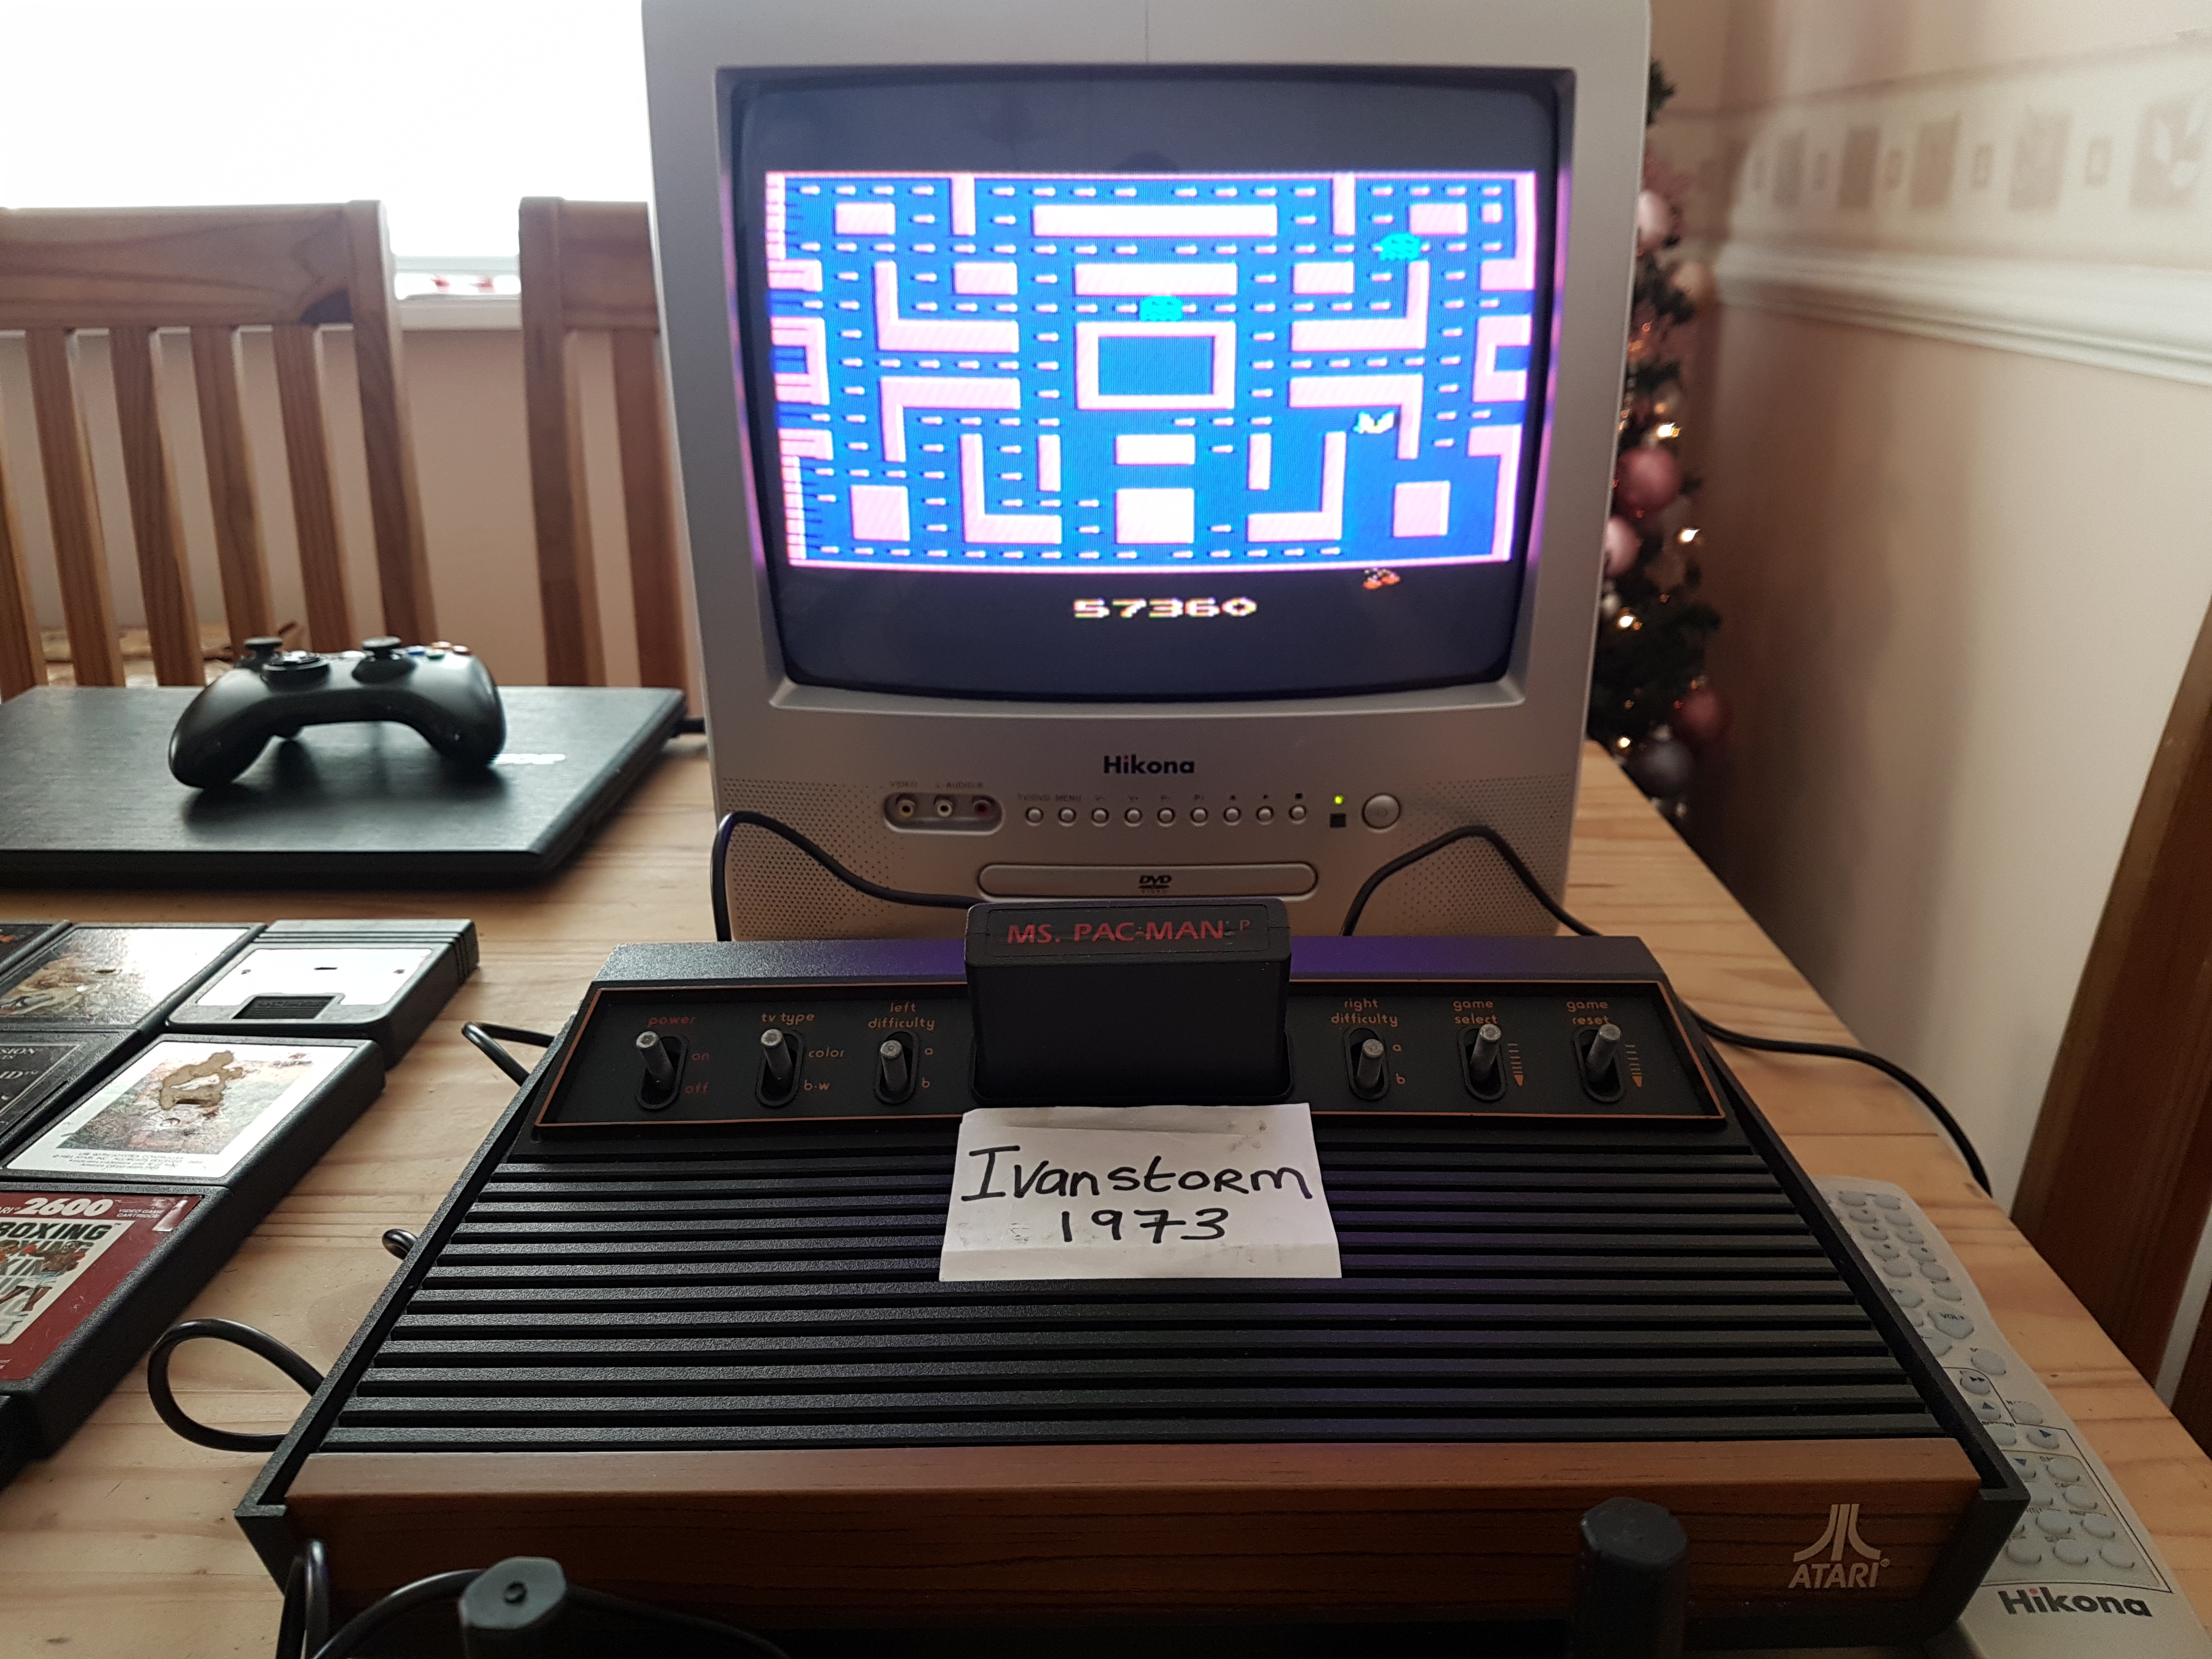 Ivanstorm1973: Ms. Pac-Man (Atari 2600) 57,360 points on 2017-12-26 11:51:20